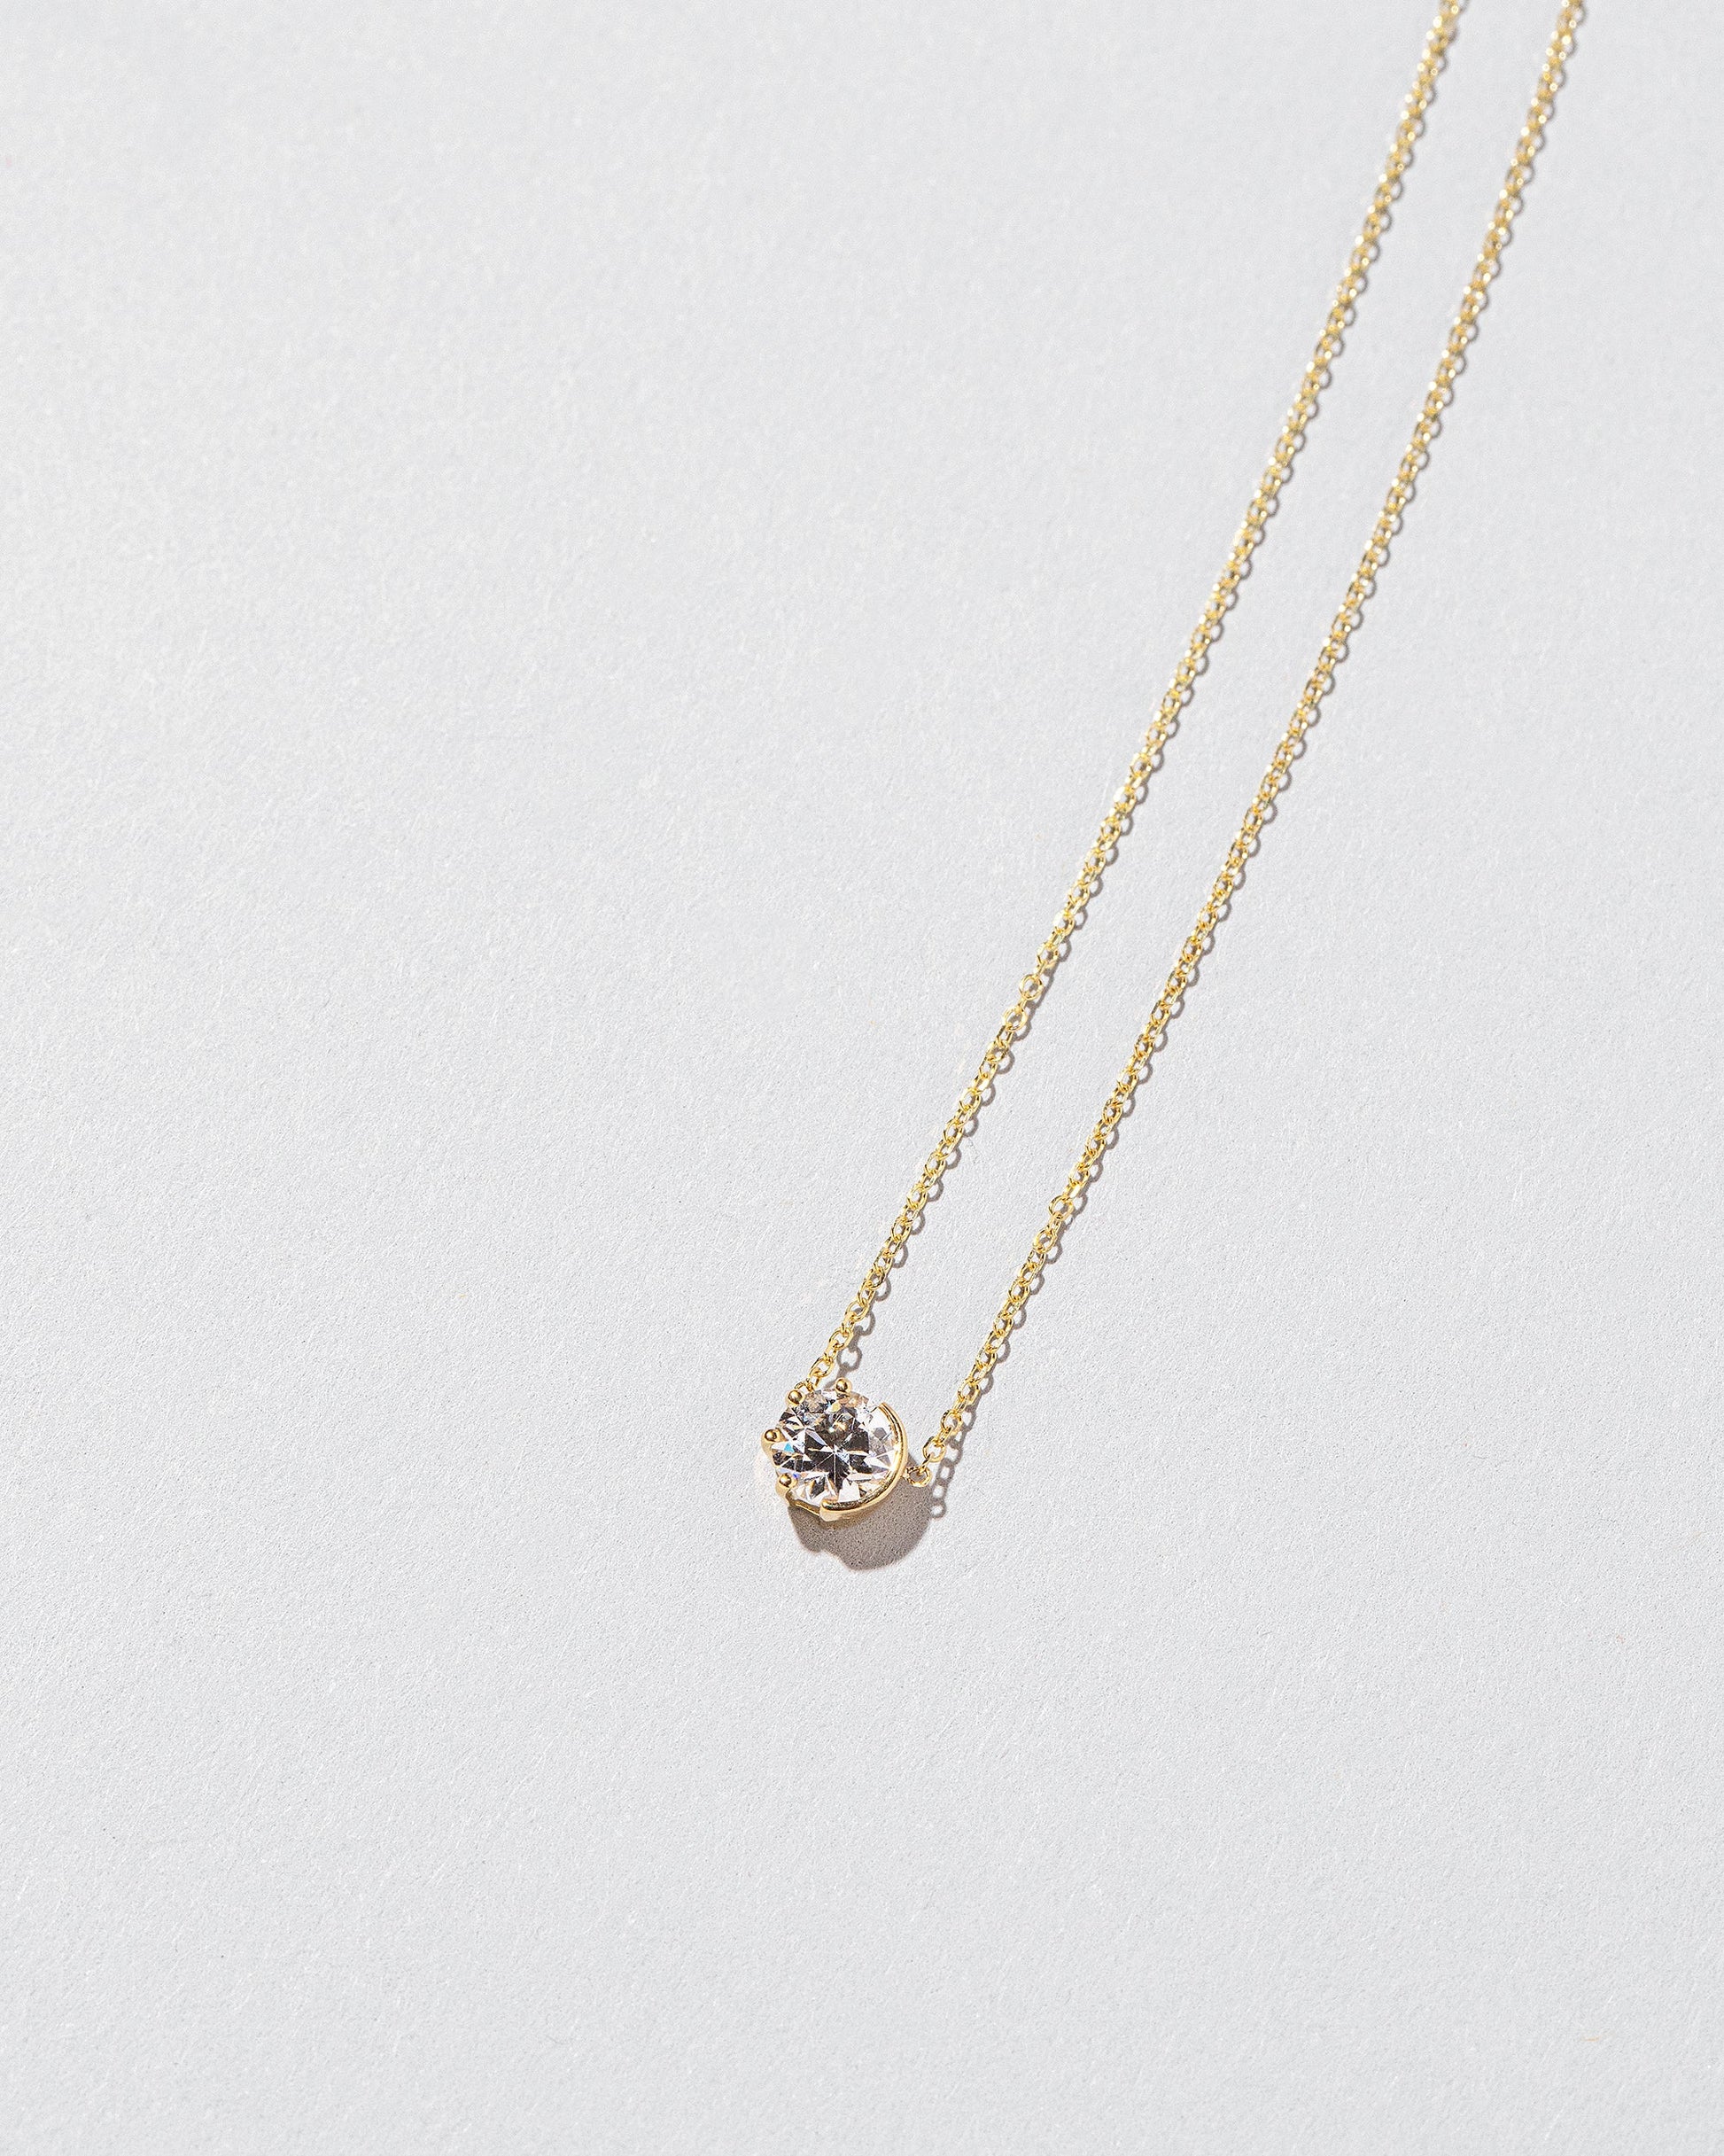  Sun & Moon Necklace - White Diamond on light color background.